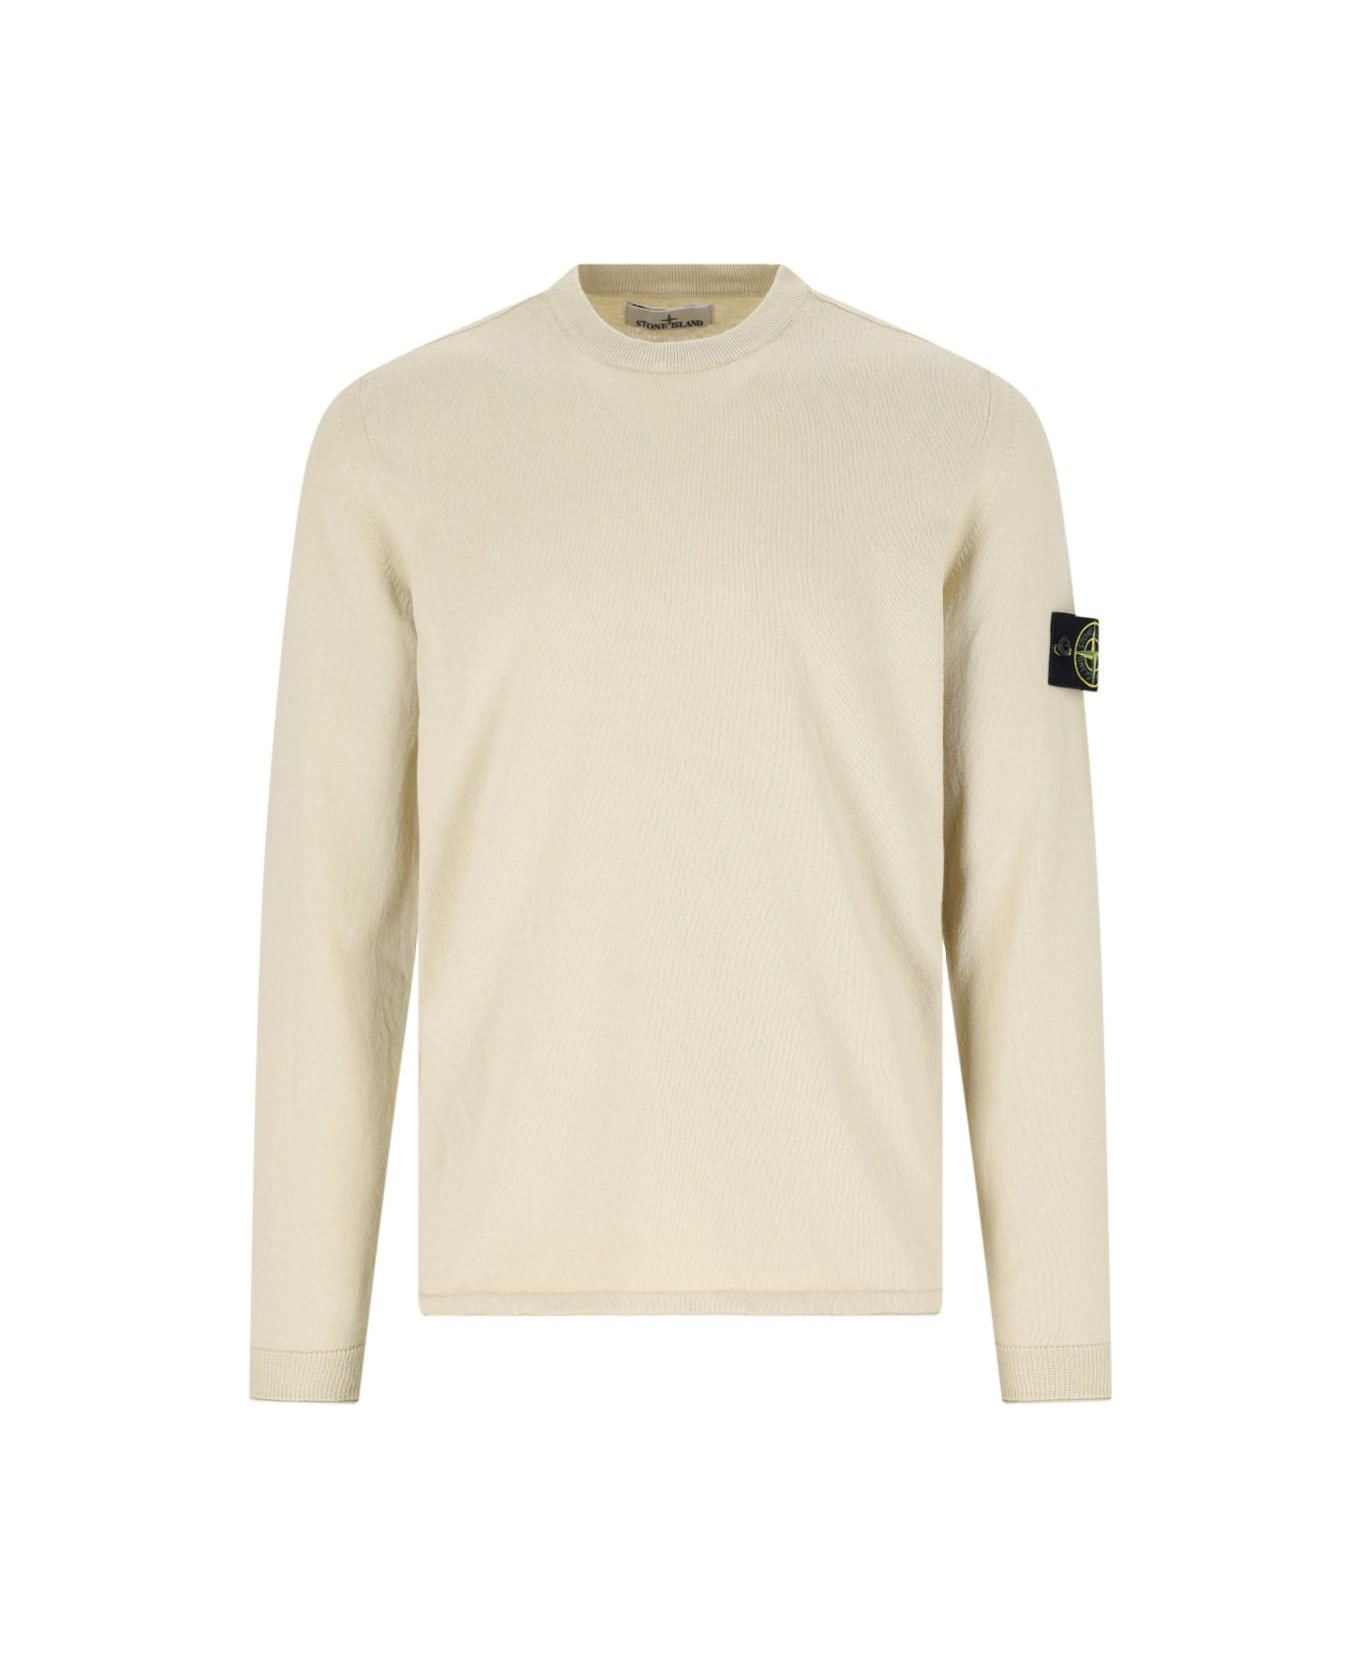 Stone Island Logo Sweater - Tecnologias Kari traa Caro Ärmelloses T-Shirt